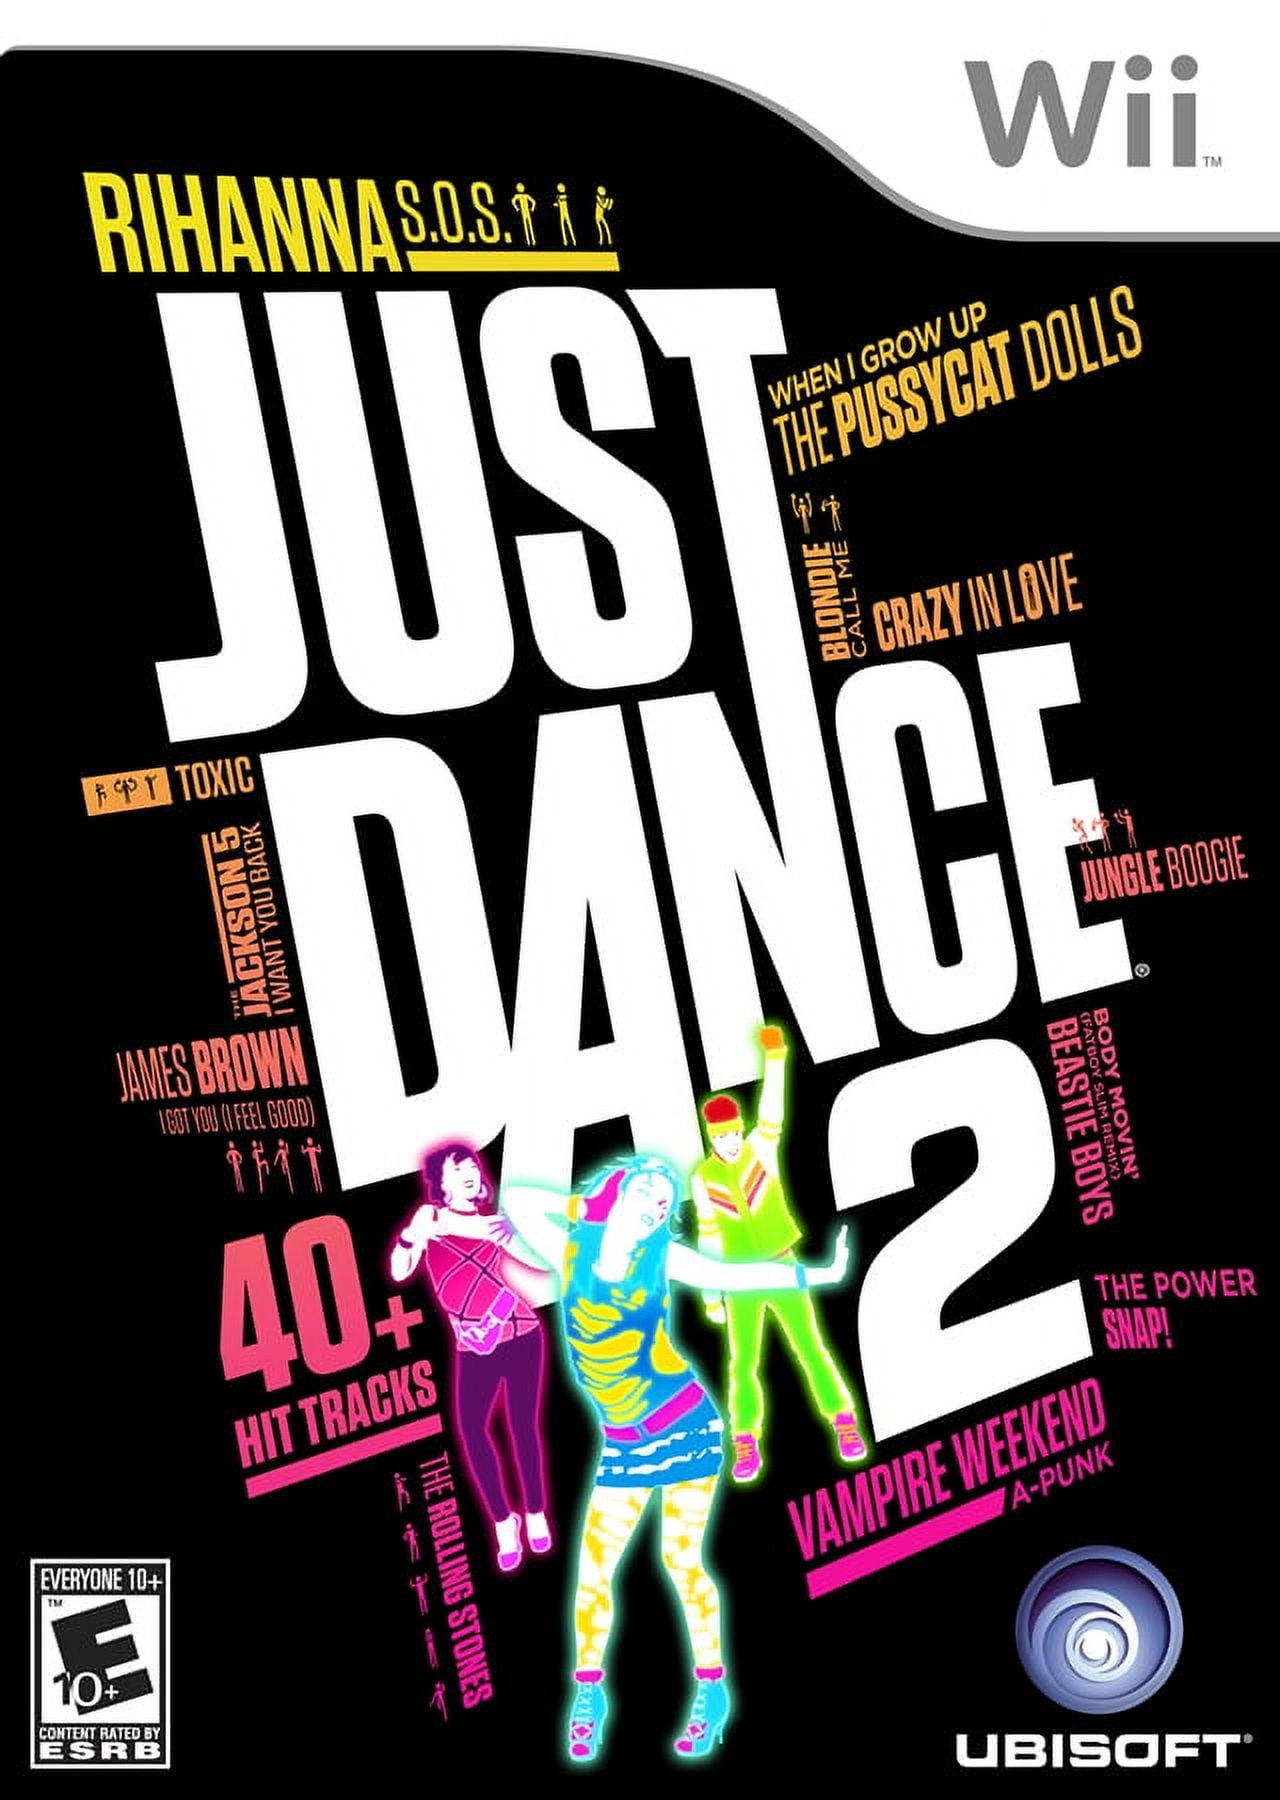 Just Dance 2 Best Buy Edition (Nintendo Wii, 2010) Rihanna Vampire Weekend  8888176602